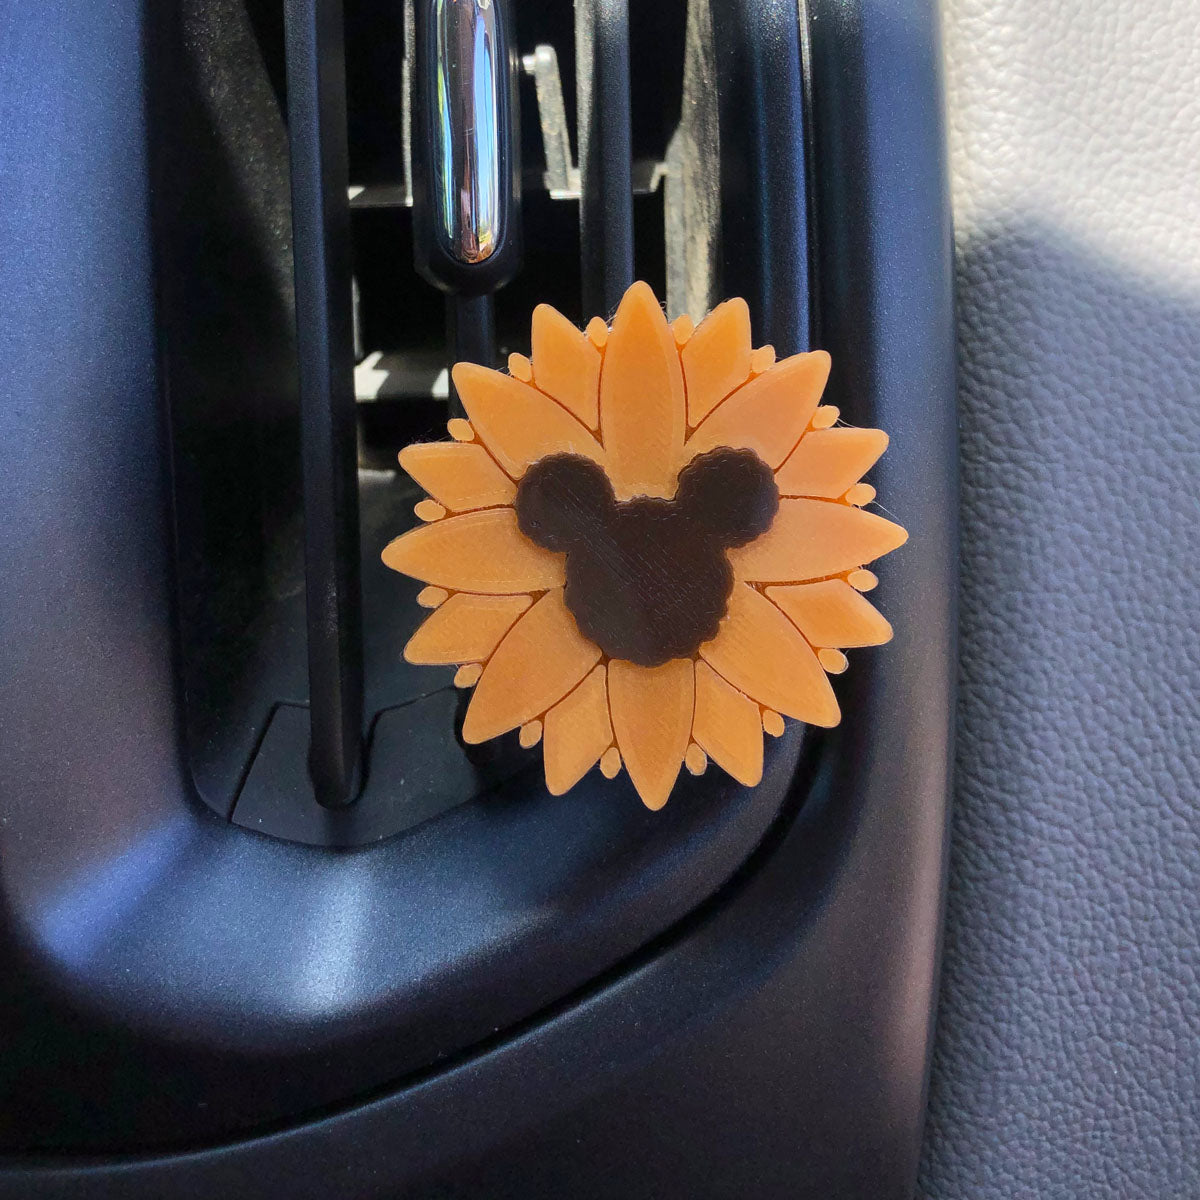 Sunflower Car Character Clip - Vent Decor / Holder